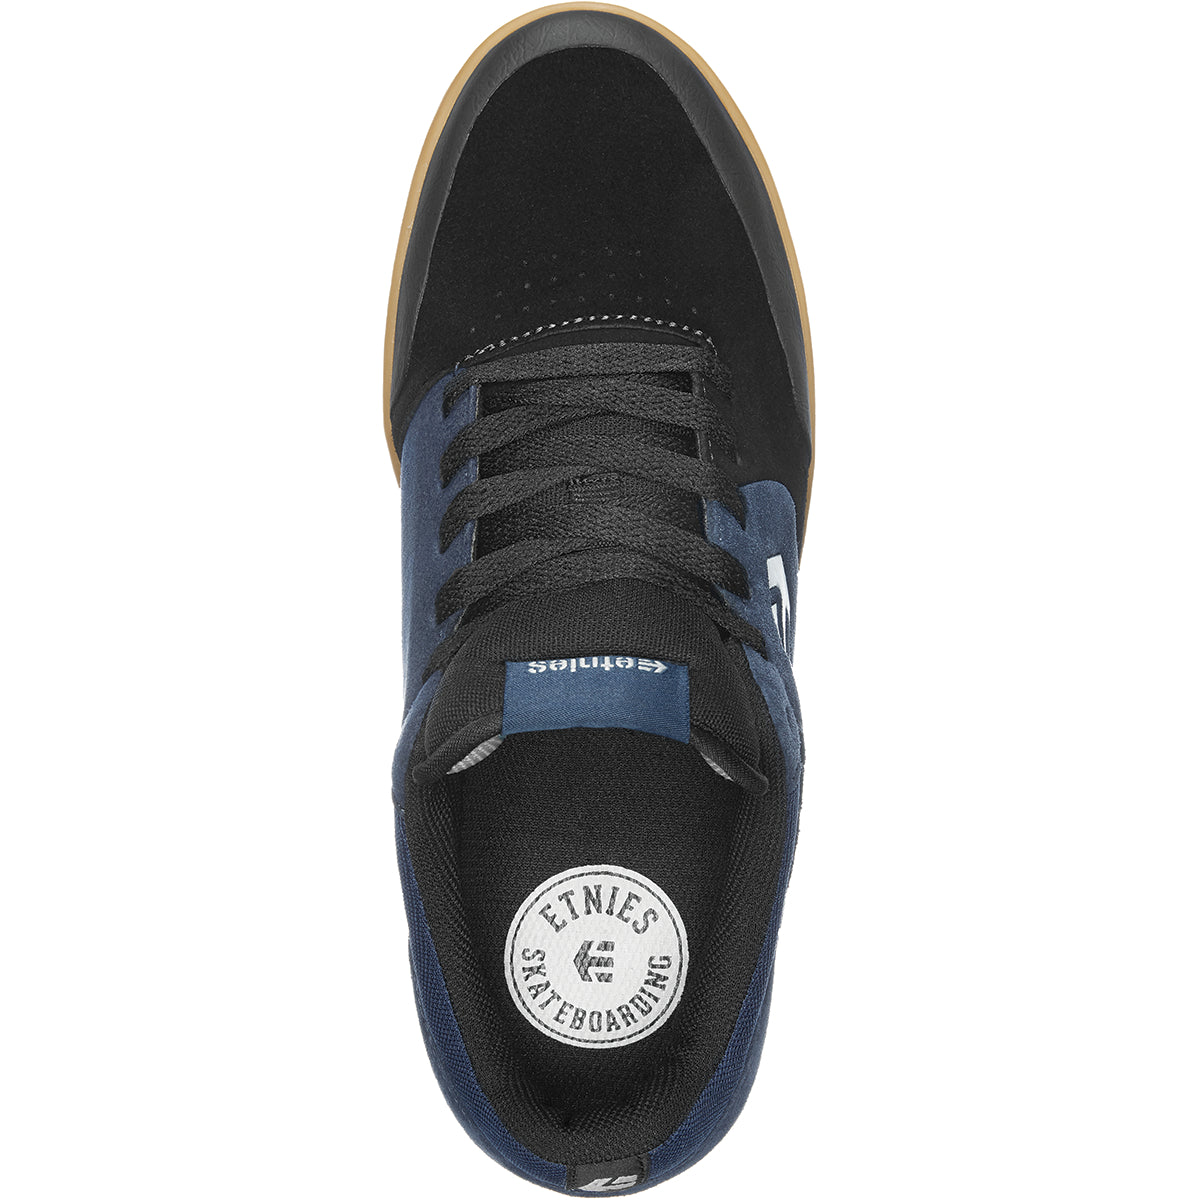 Black/Blue Marana Etnies Skateboarding Shoe Top